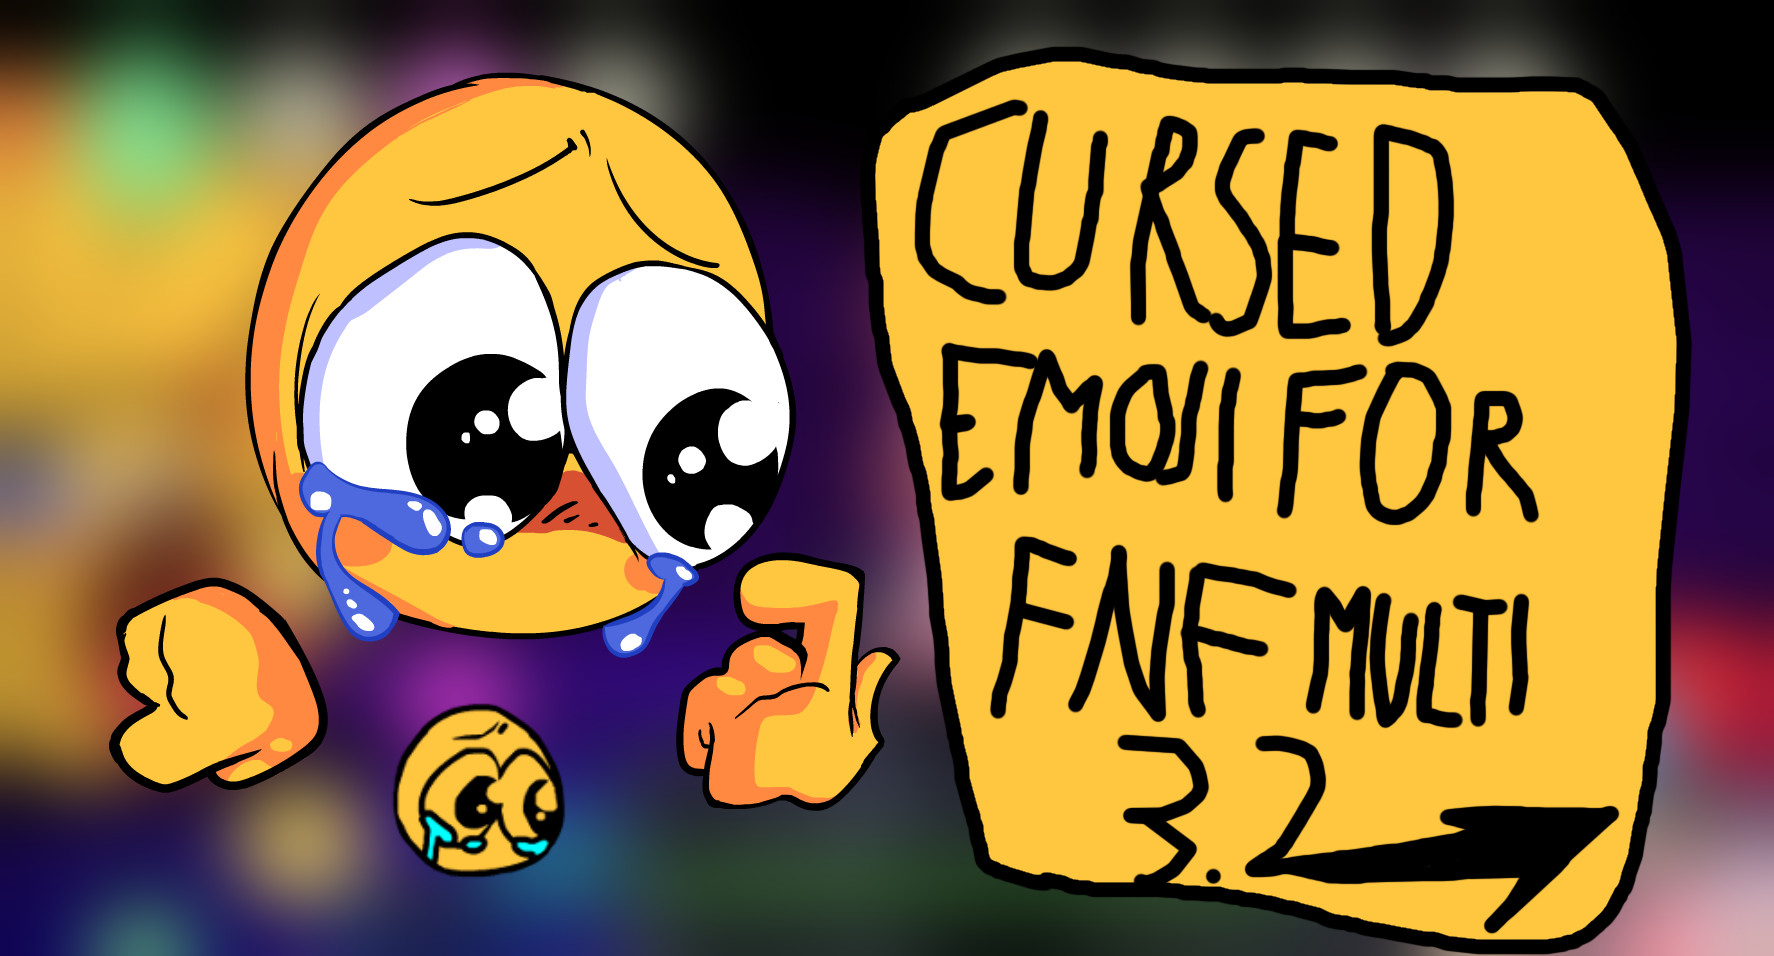 Cursed Emoji People - Crybaby by EpicTreyMC on Newgrounds